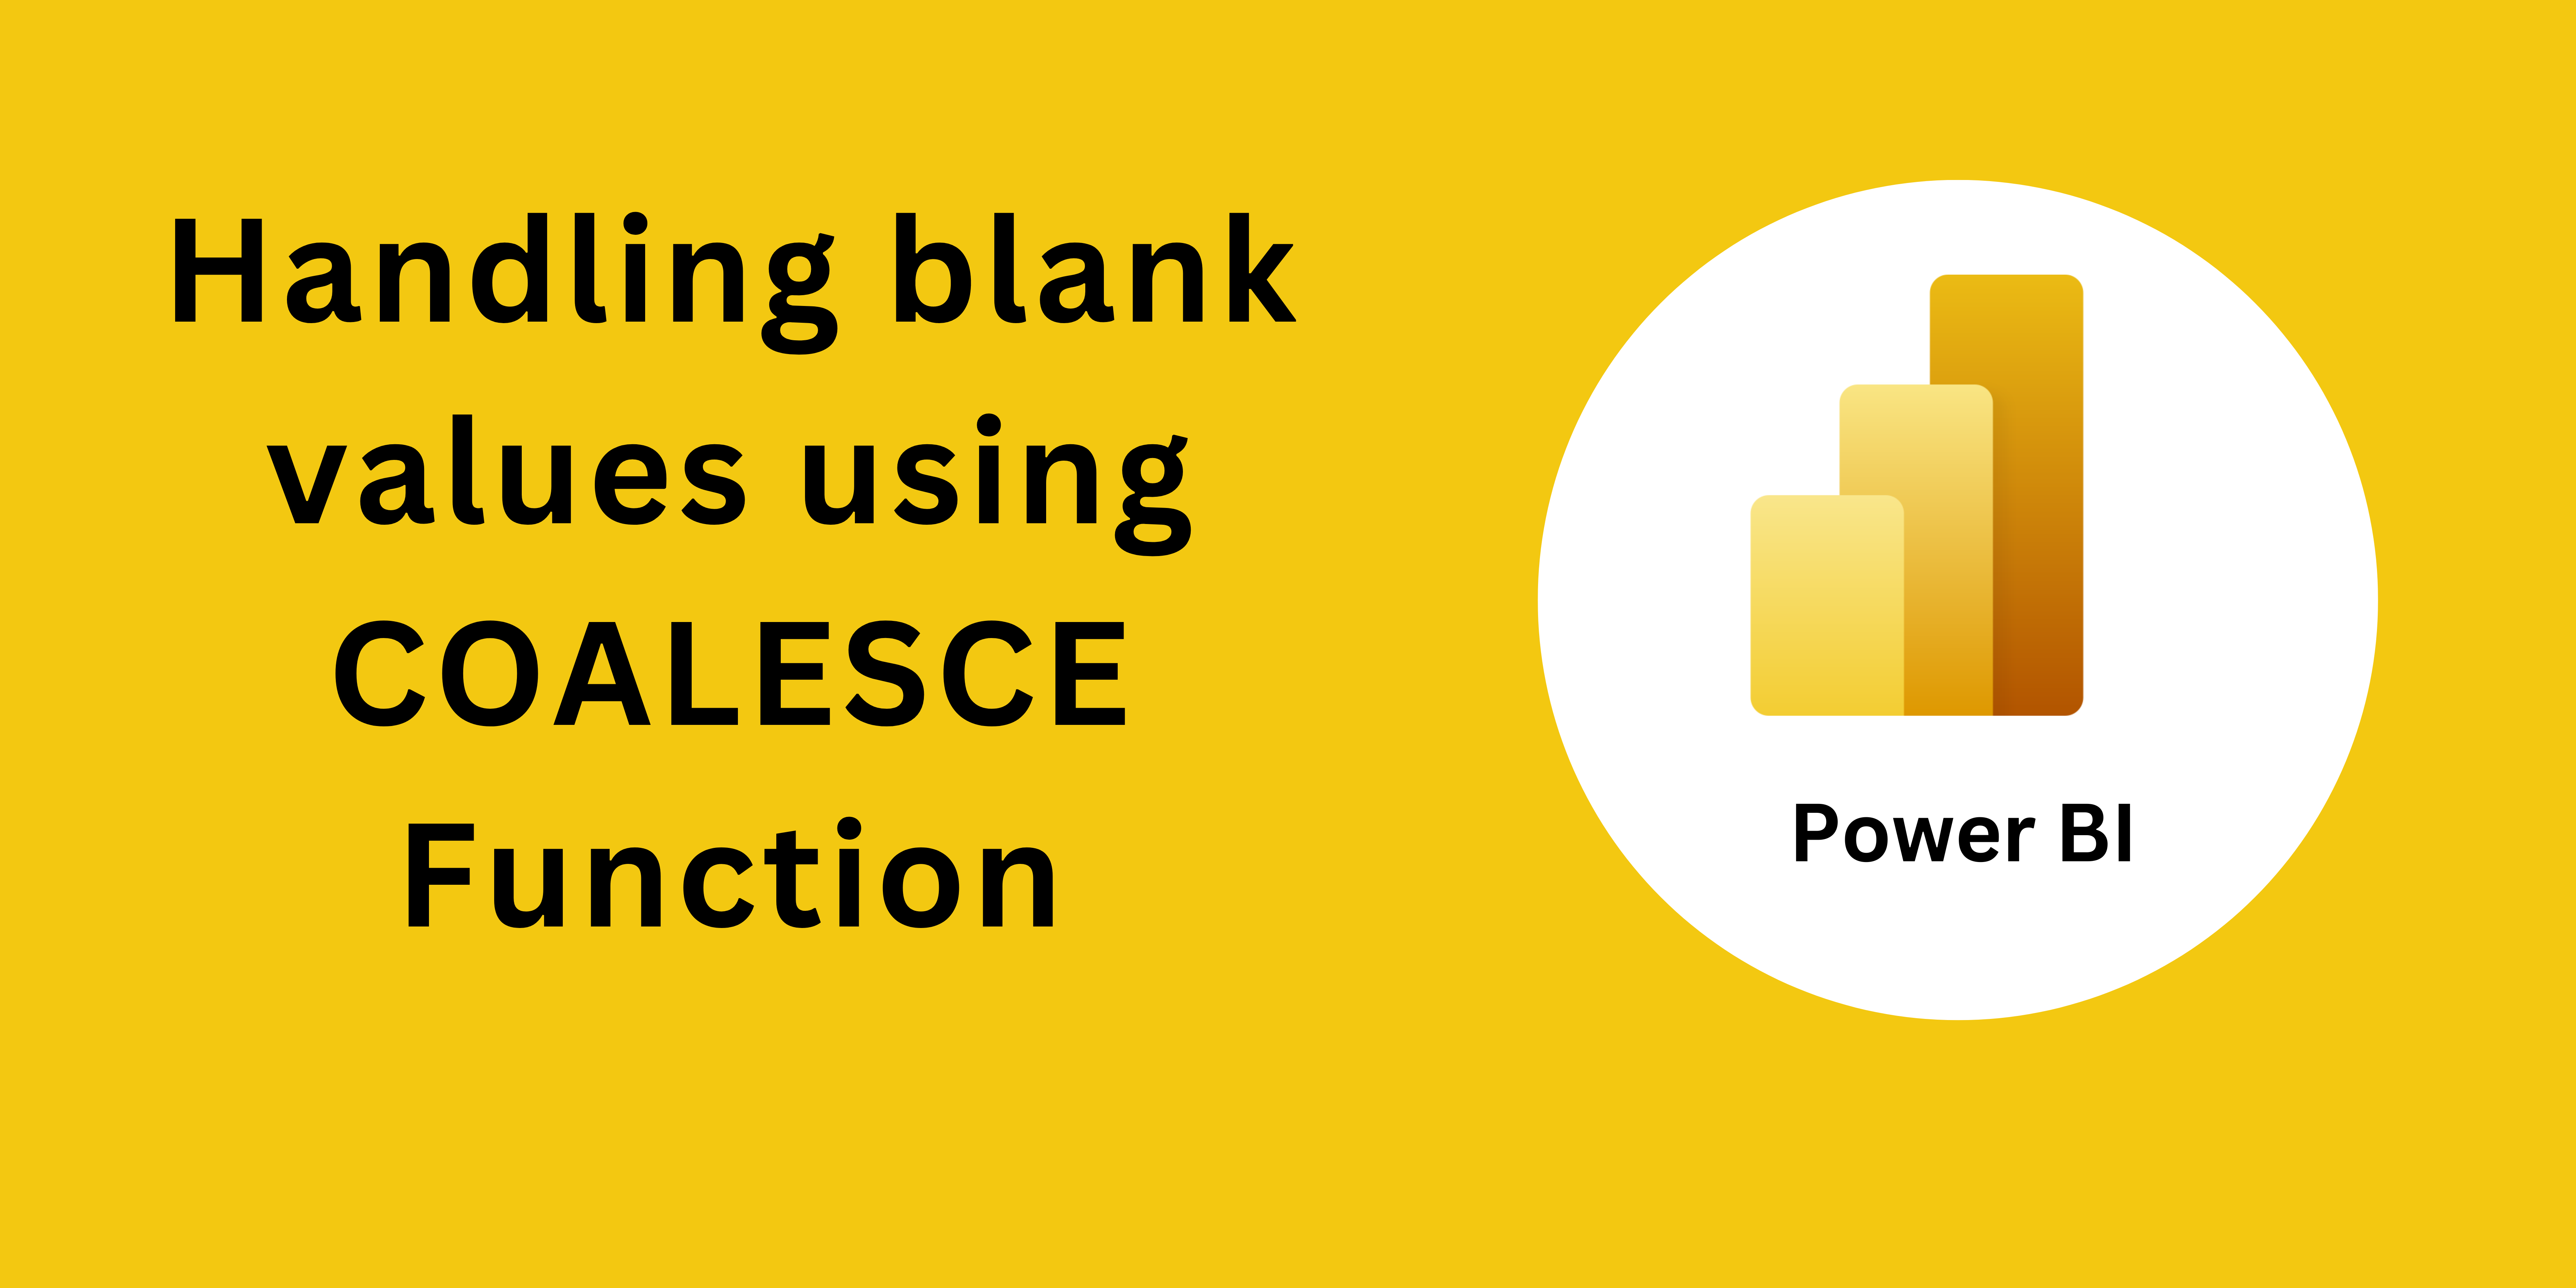 Handling blank values using COALESCE Function